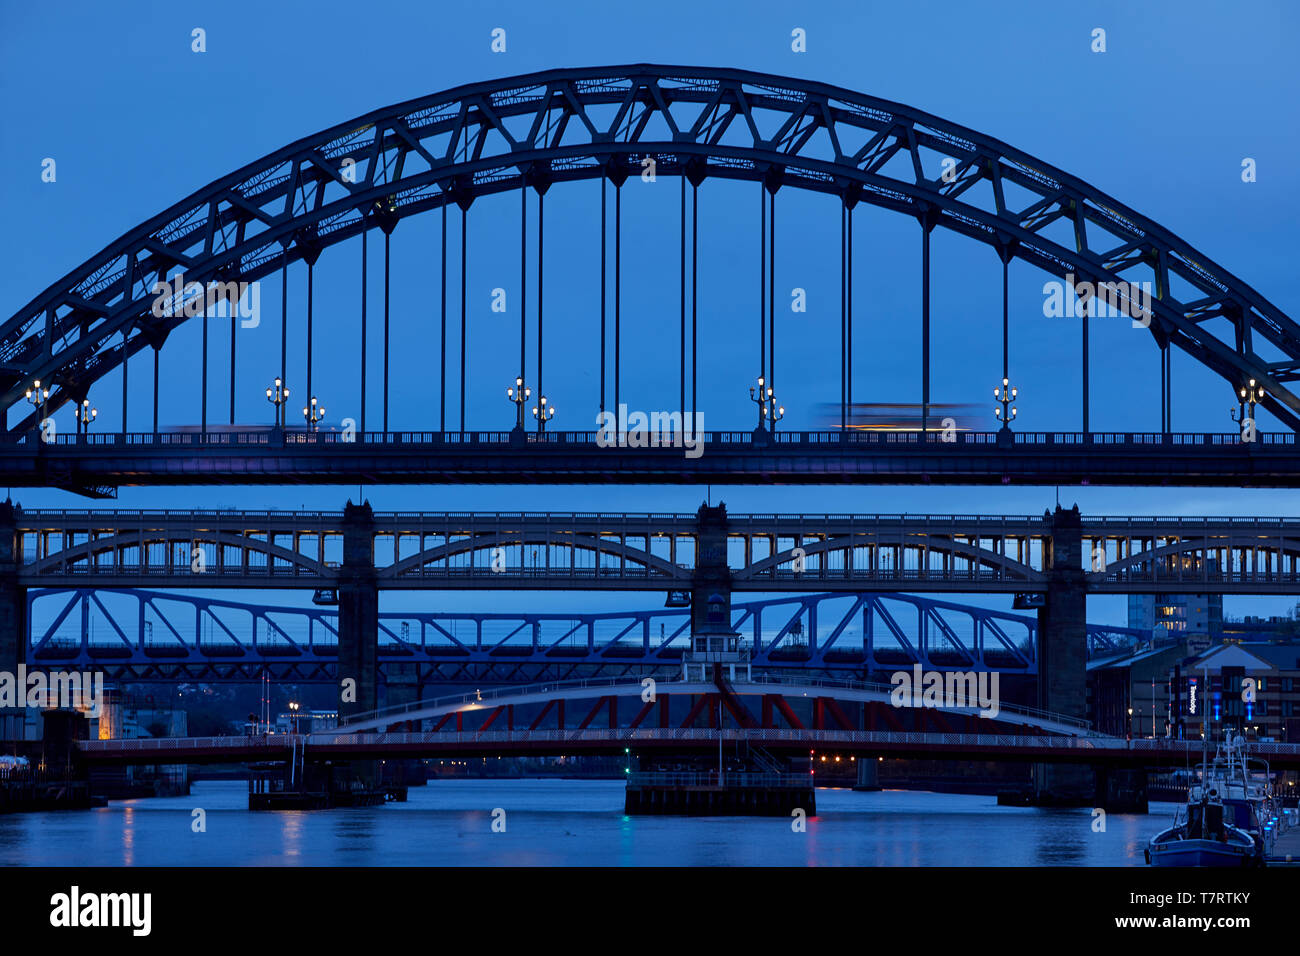 Iconic Newcastle upon Tyne  Quayside waterfront  landmark Tyne Bridge, Swing Bridge, High Level bridge and beyond is King Edward VII Bridge Stock Photo